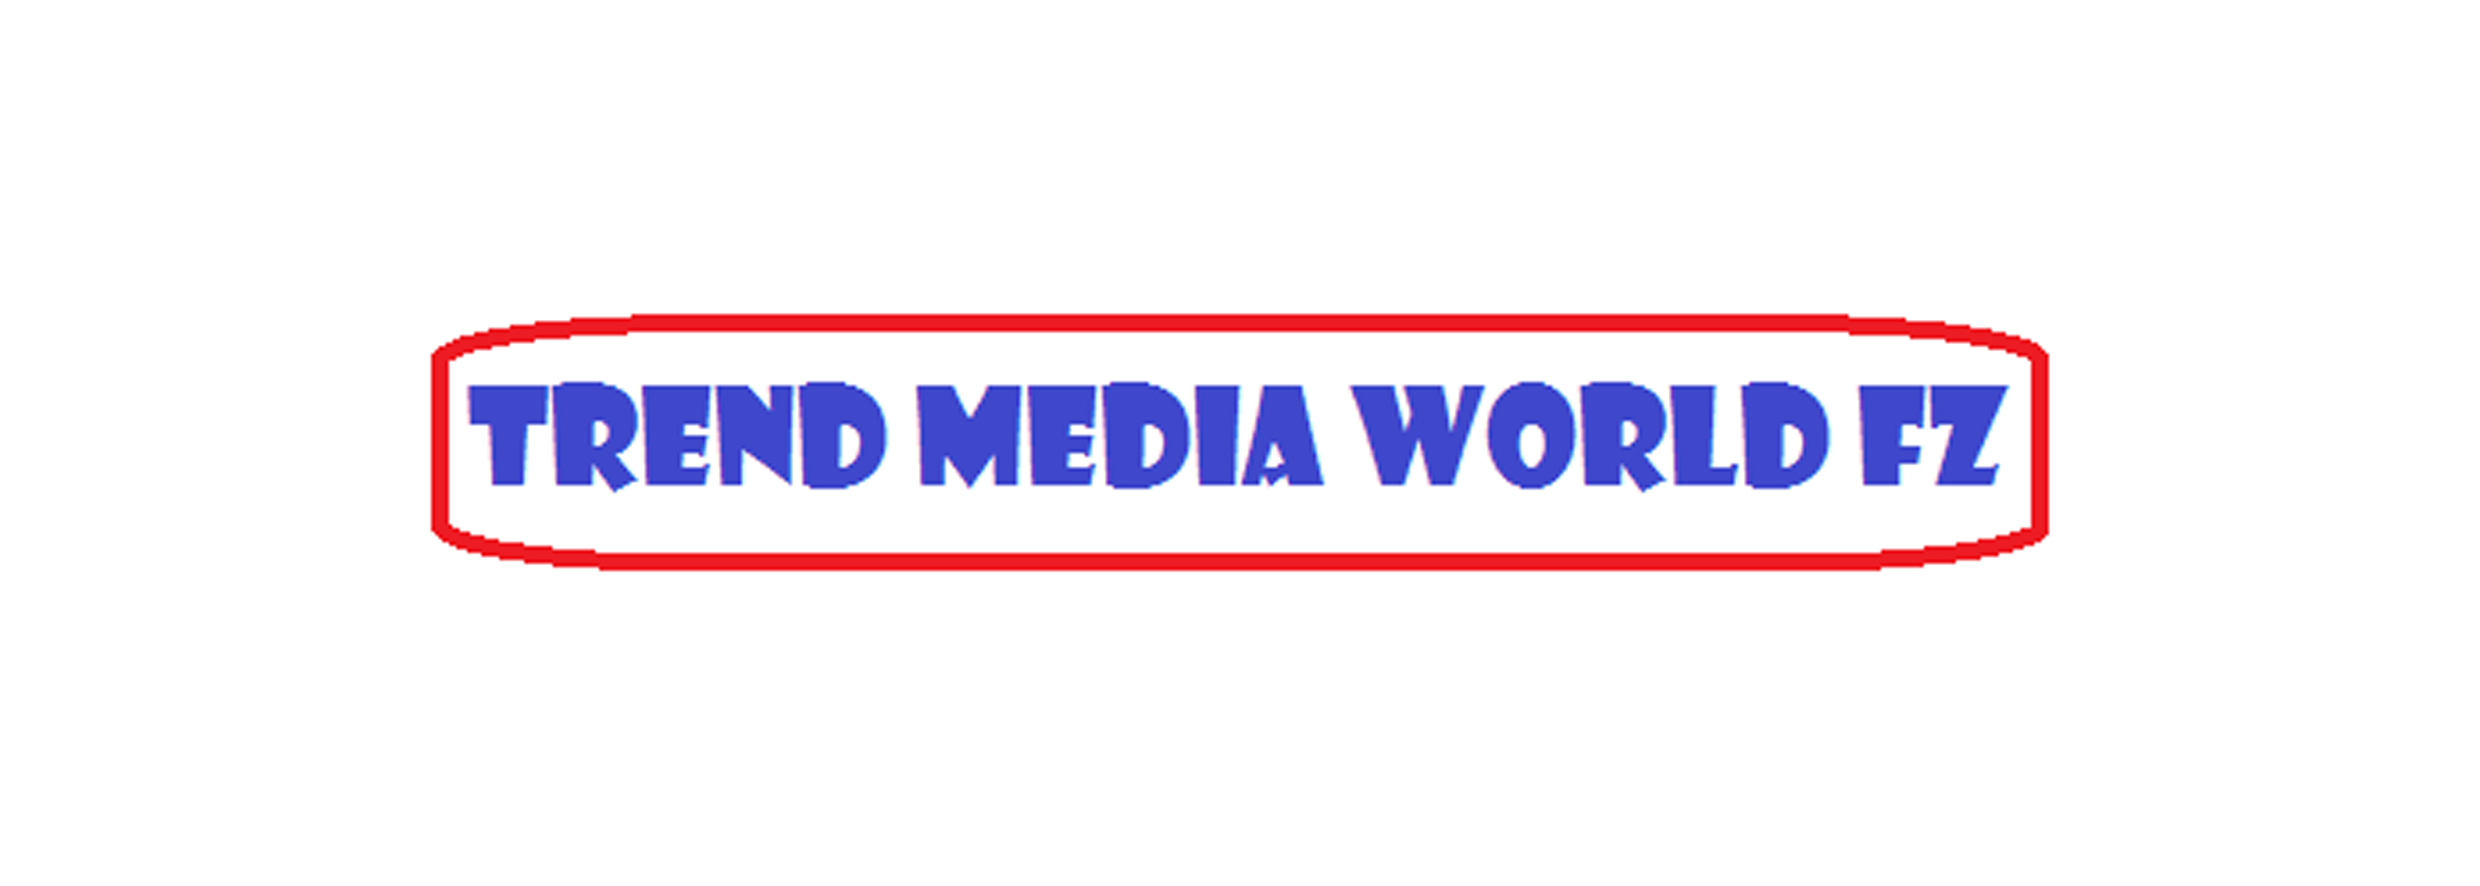 Trend Media World